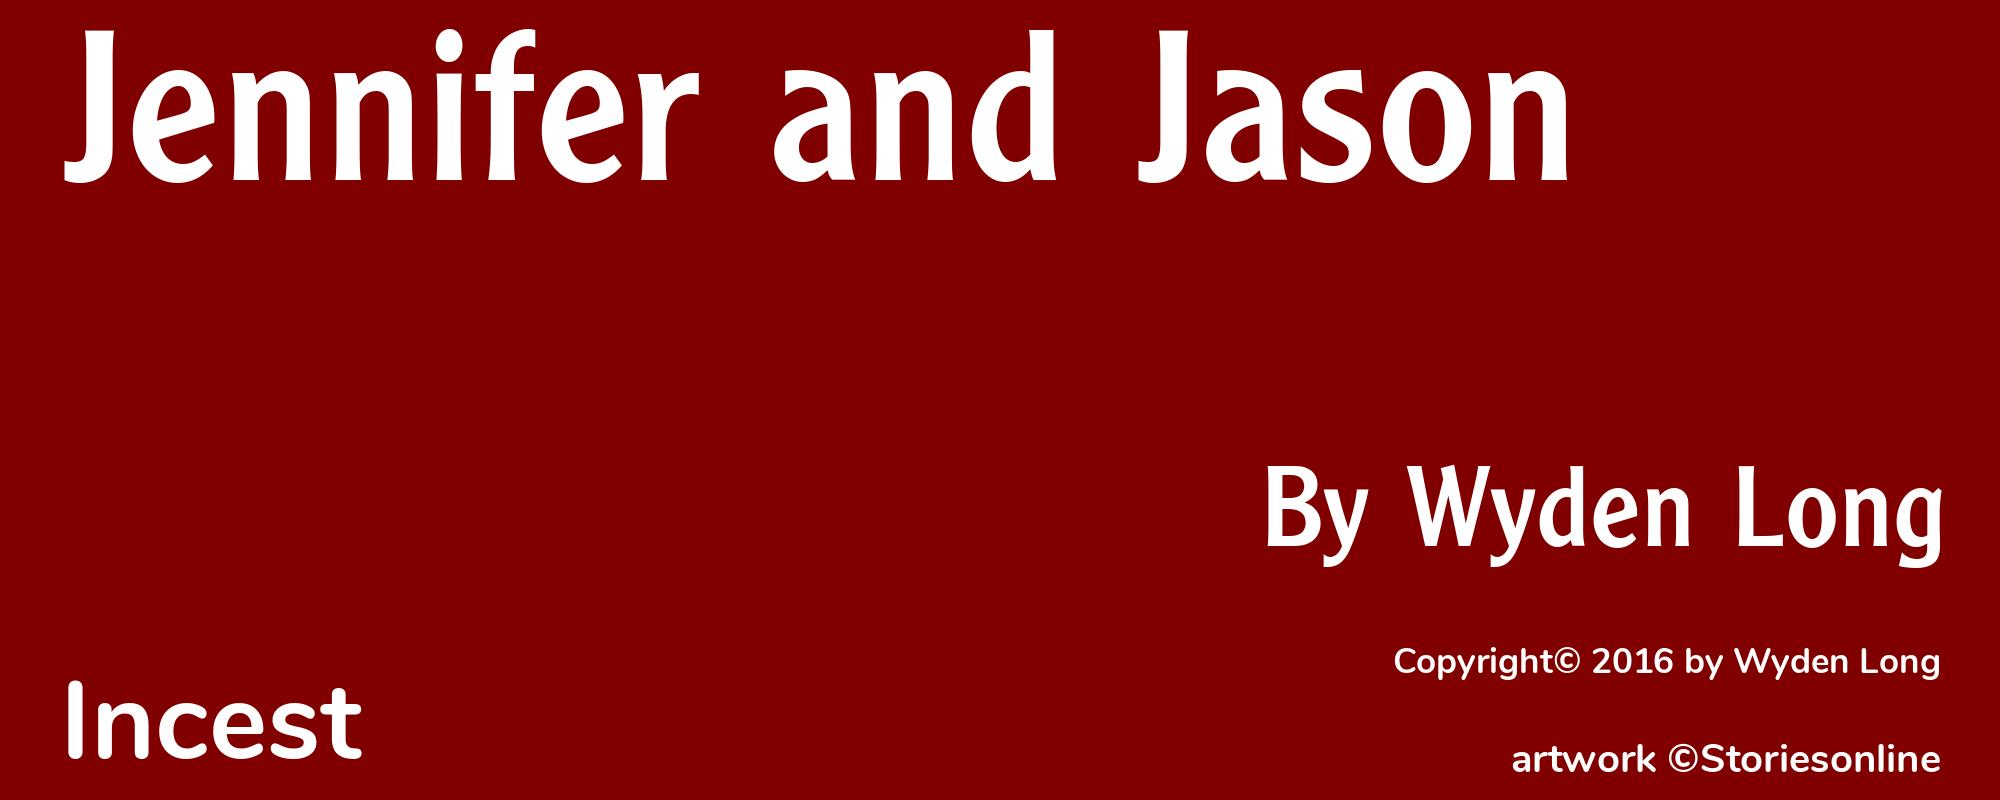 Jennifer and Jason - Cover